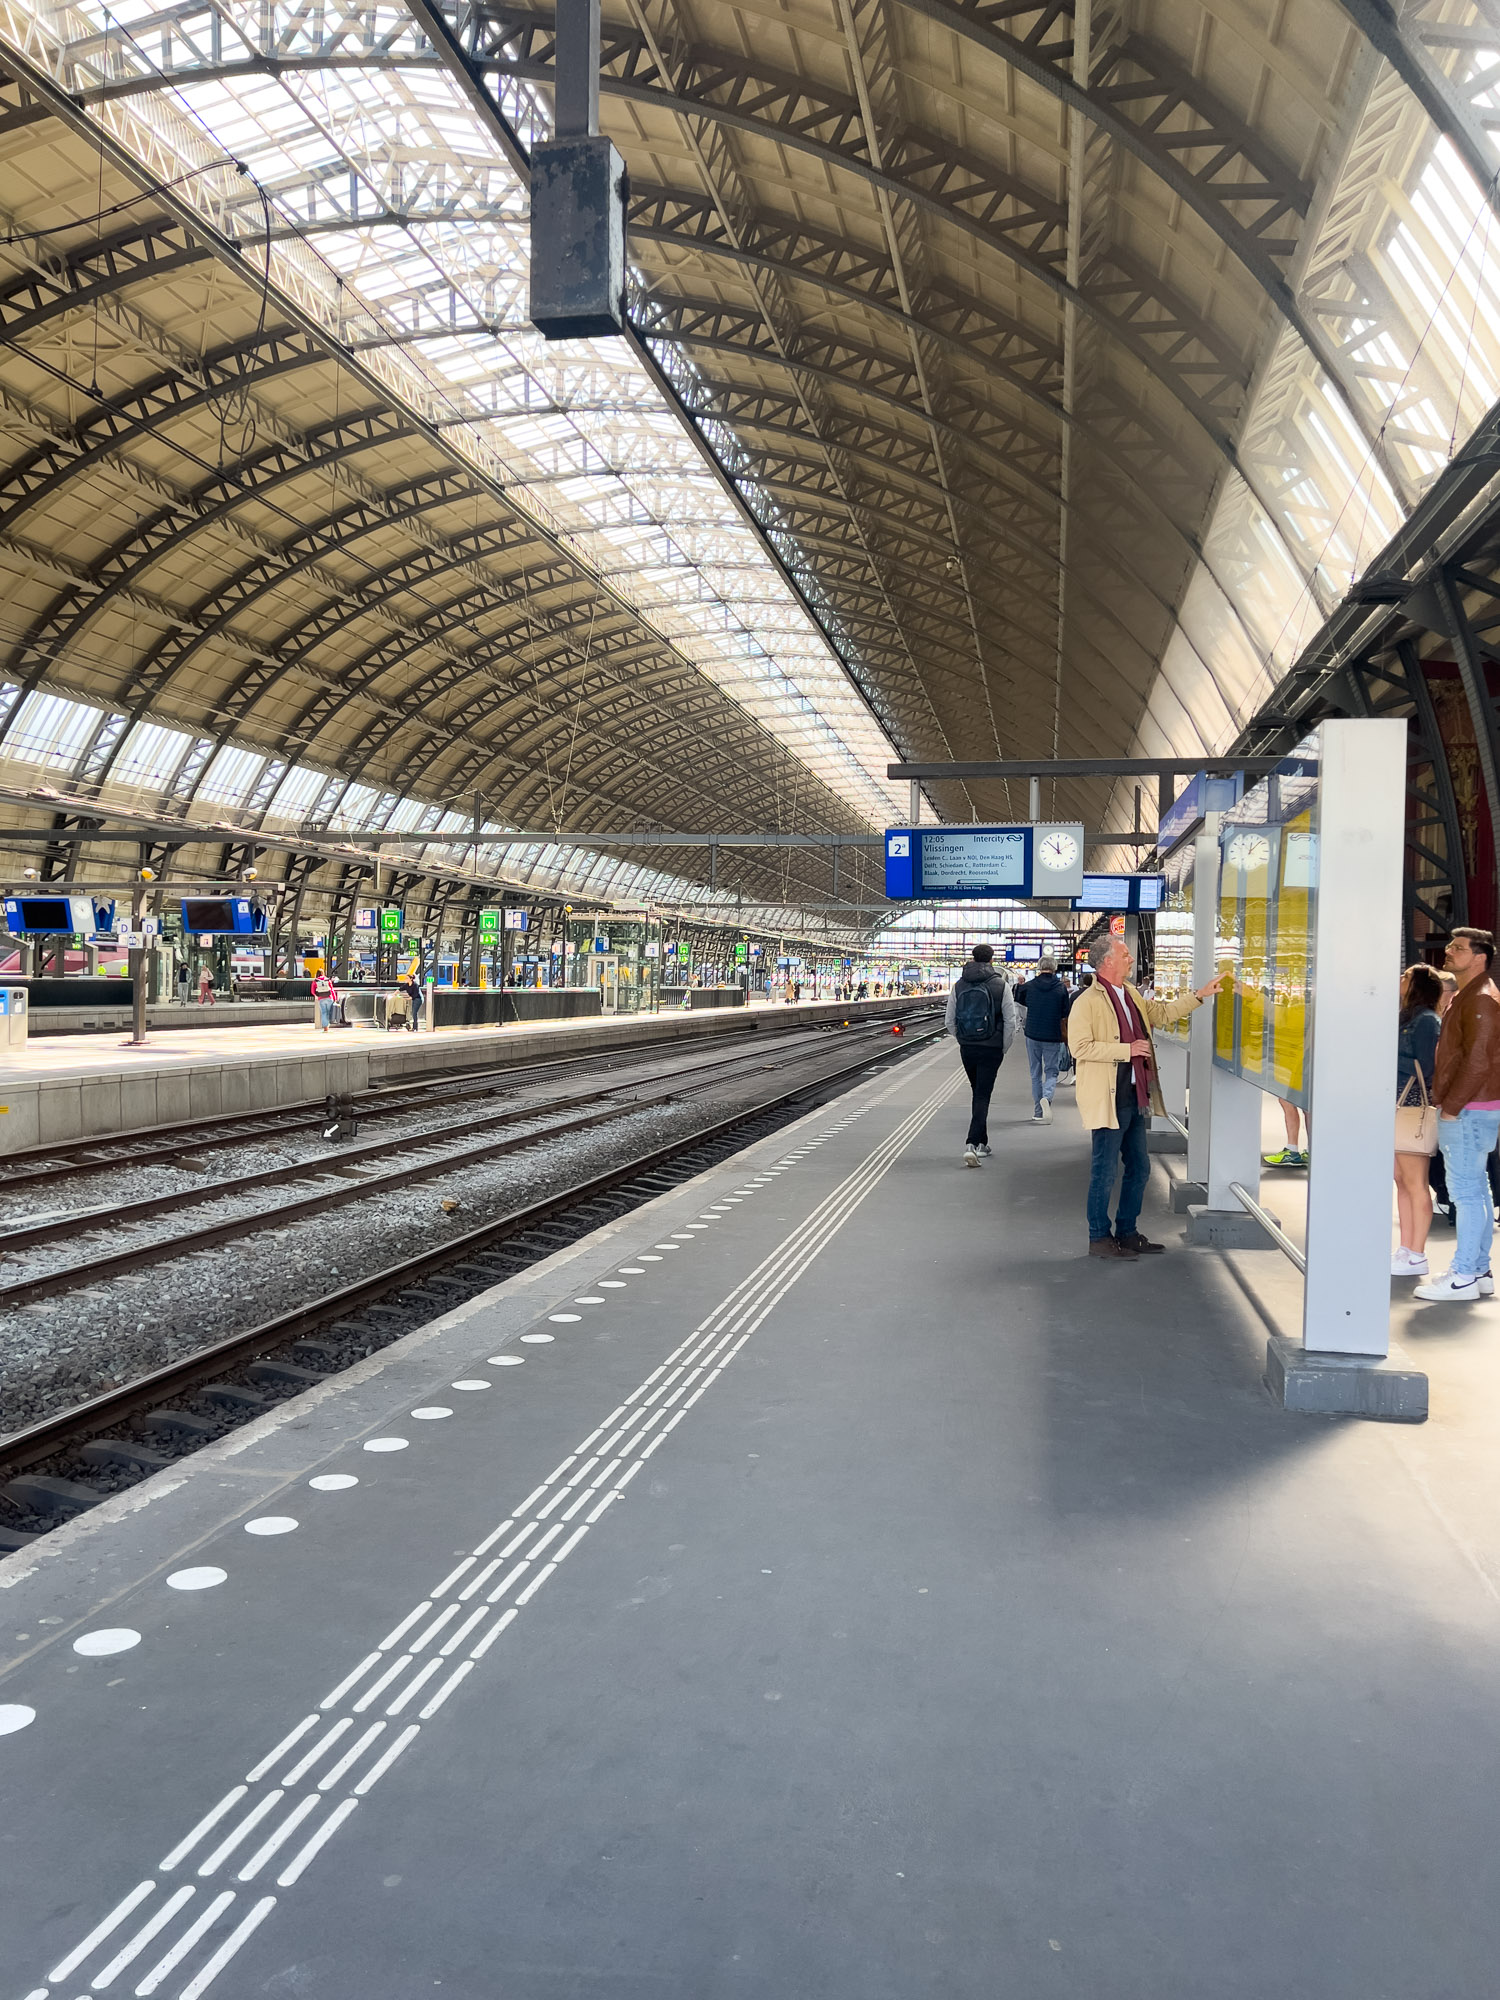 Amsterdam Centraal Train Station - Netherlands - Europe